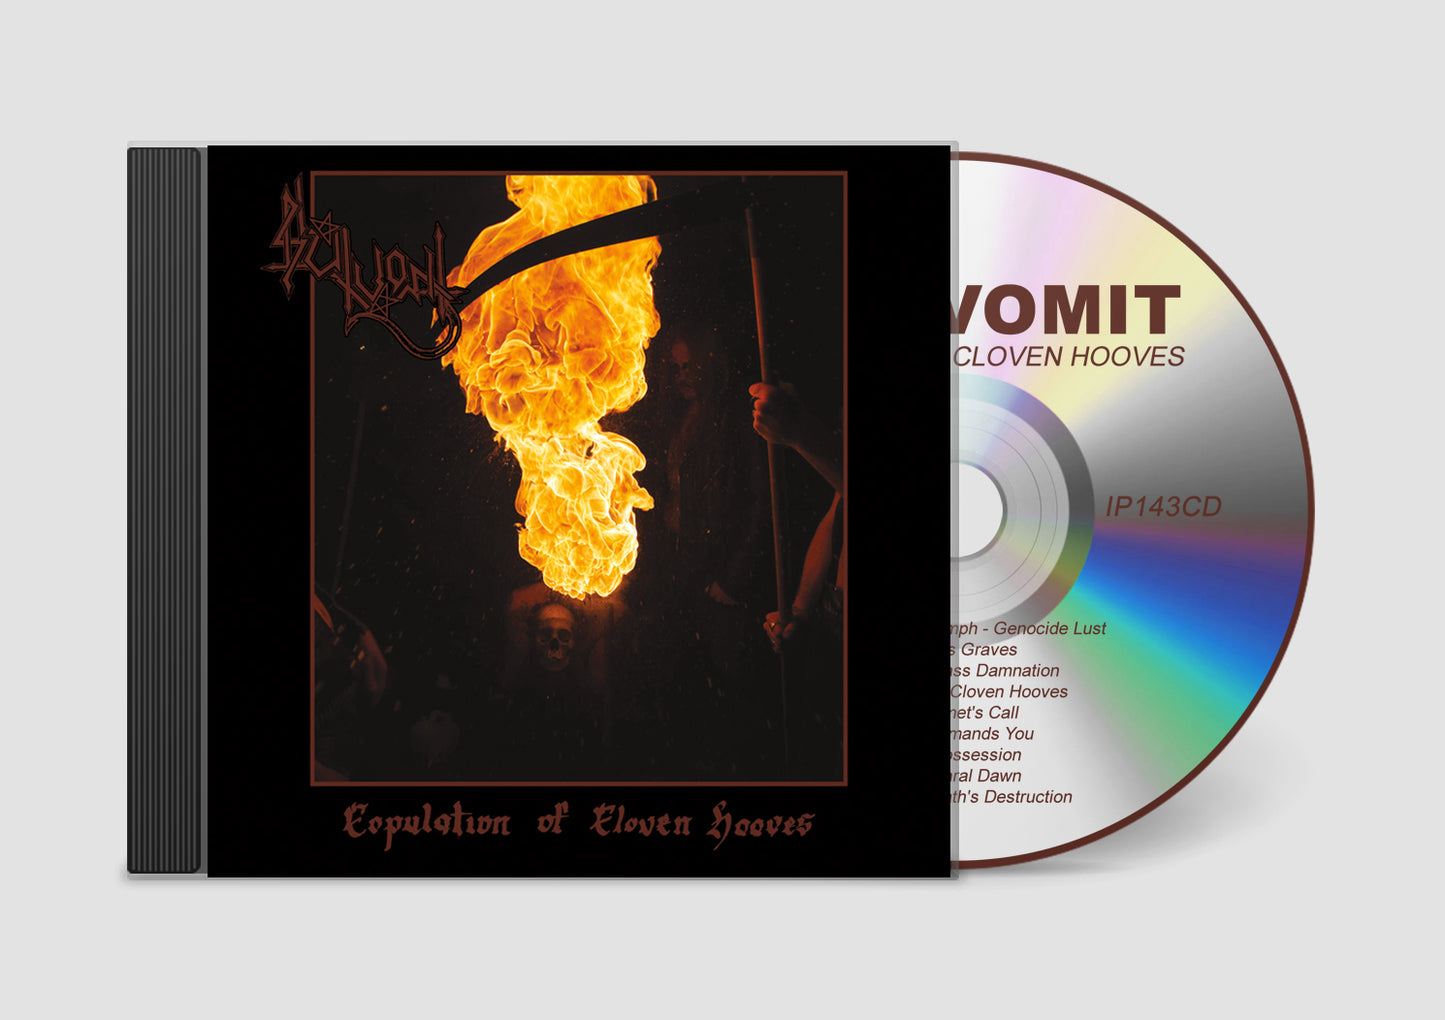 Slutvomit - Copulation of Cloven Hooves CD